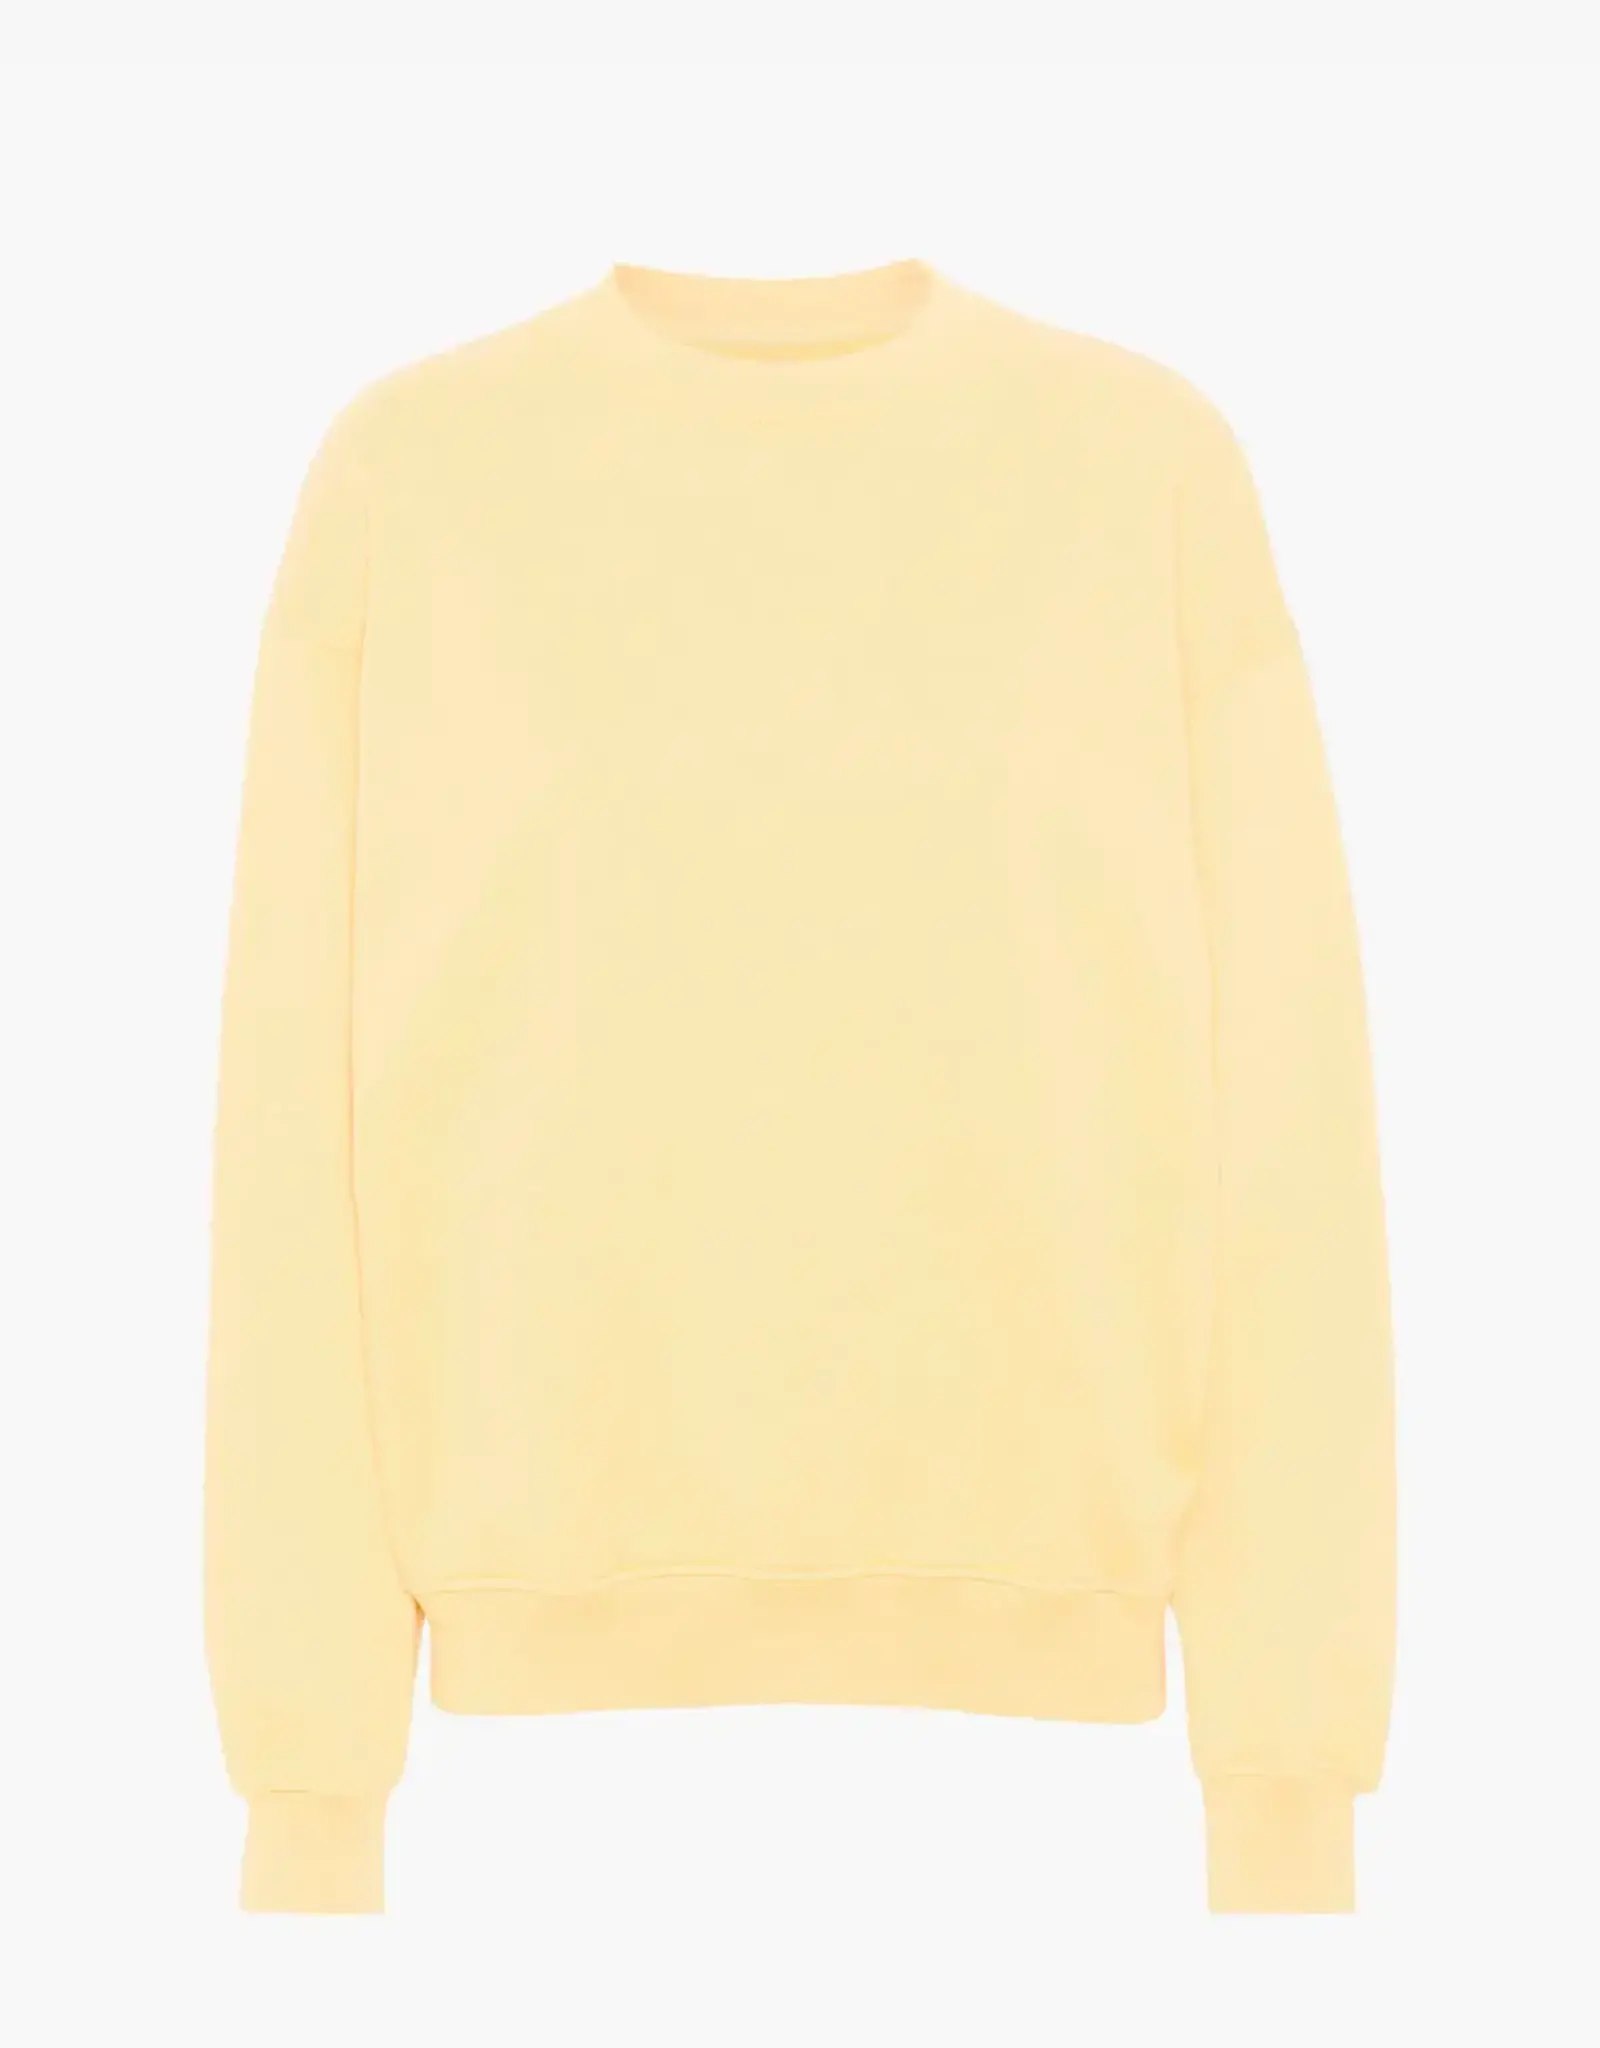 Colorful Standard Sweater 'Organic Oversized Crew' - Soft Yellow - Colorful Standard